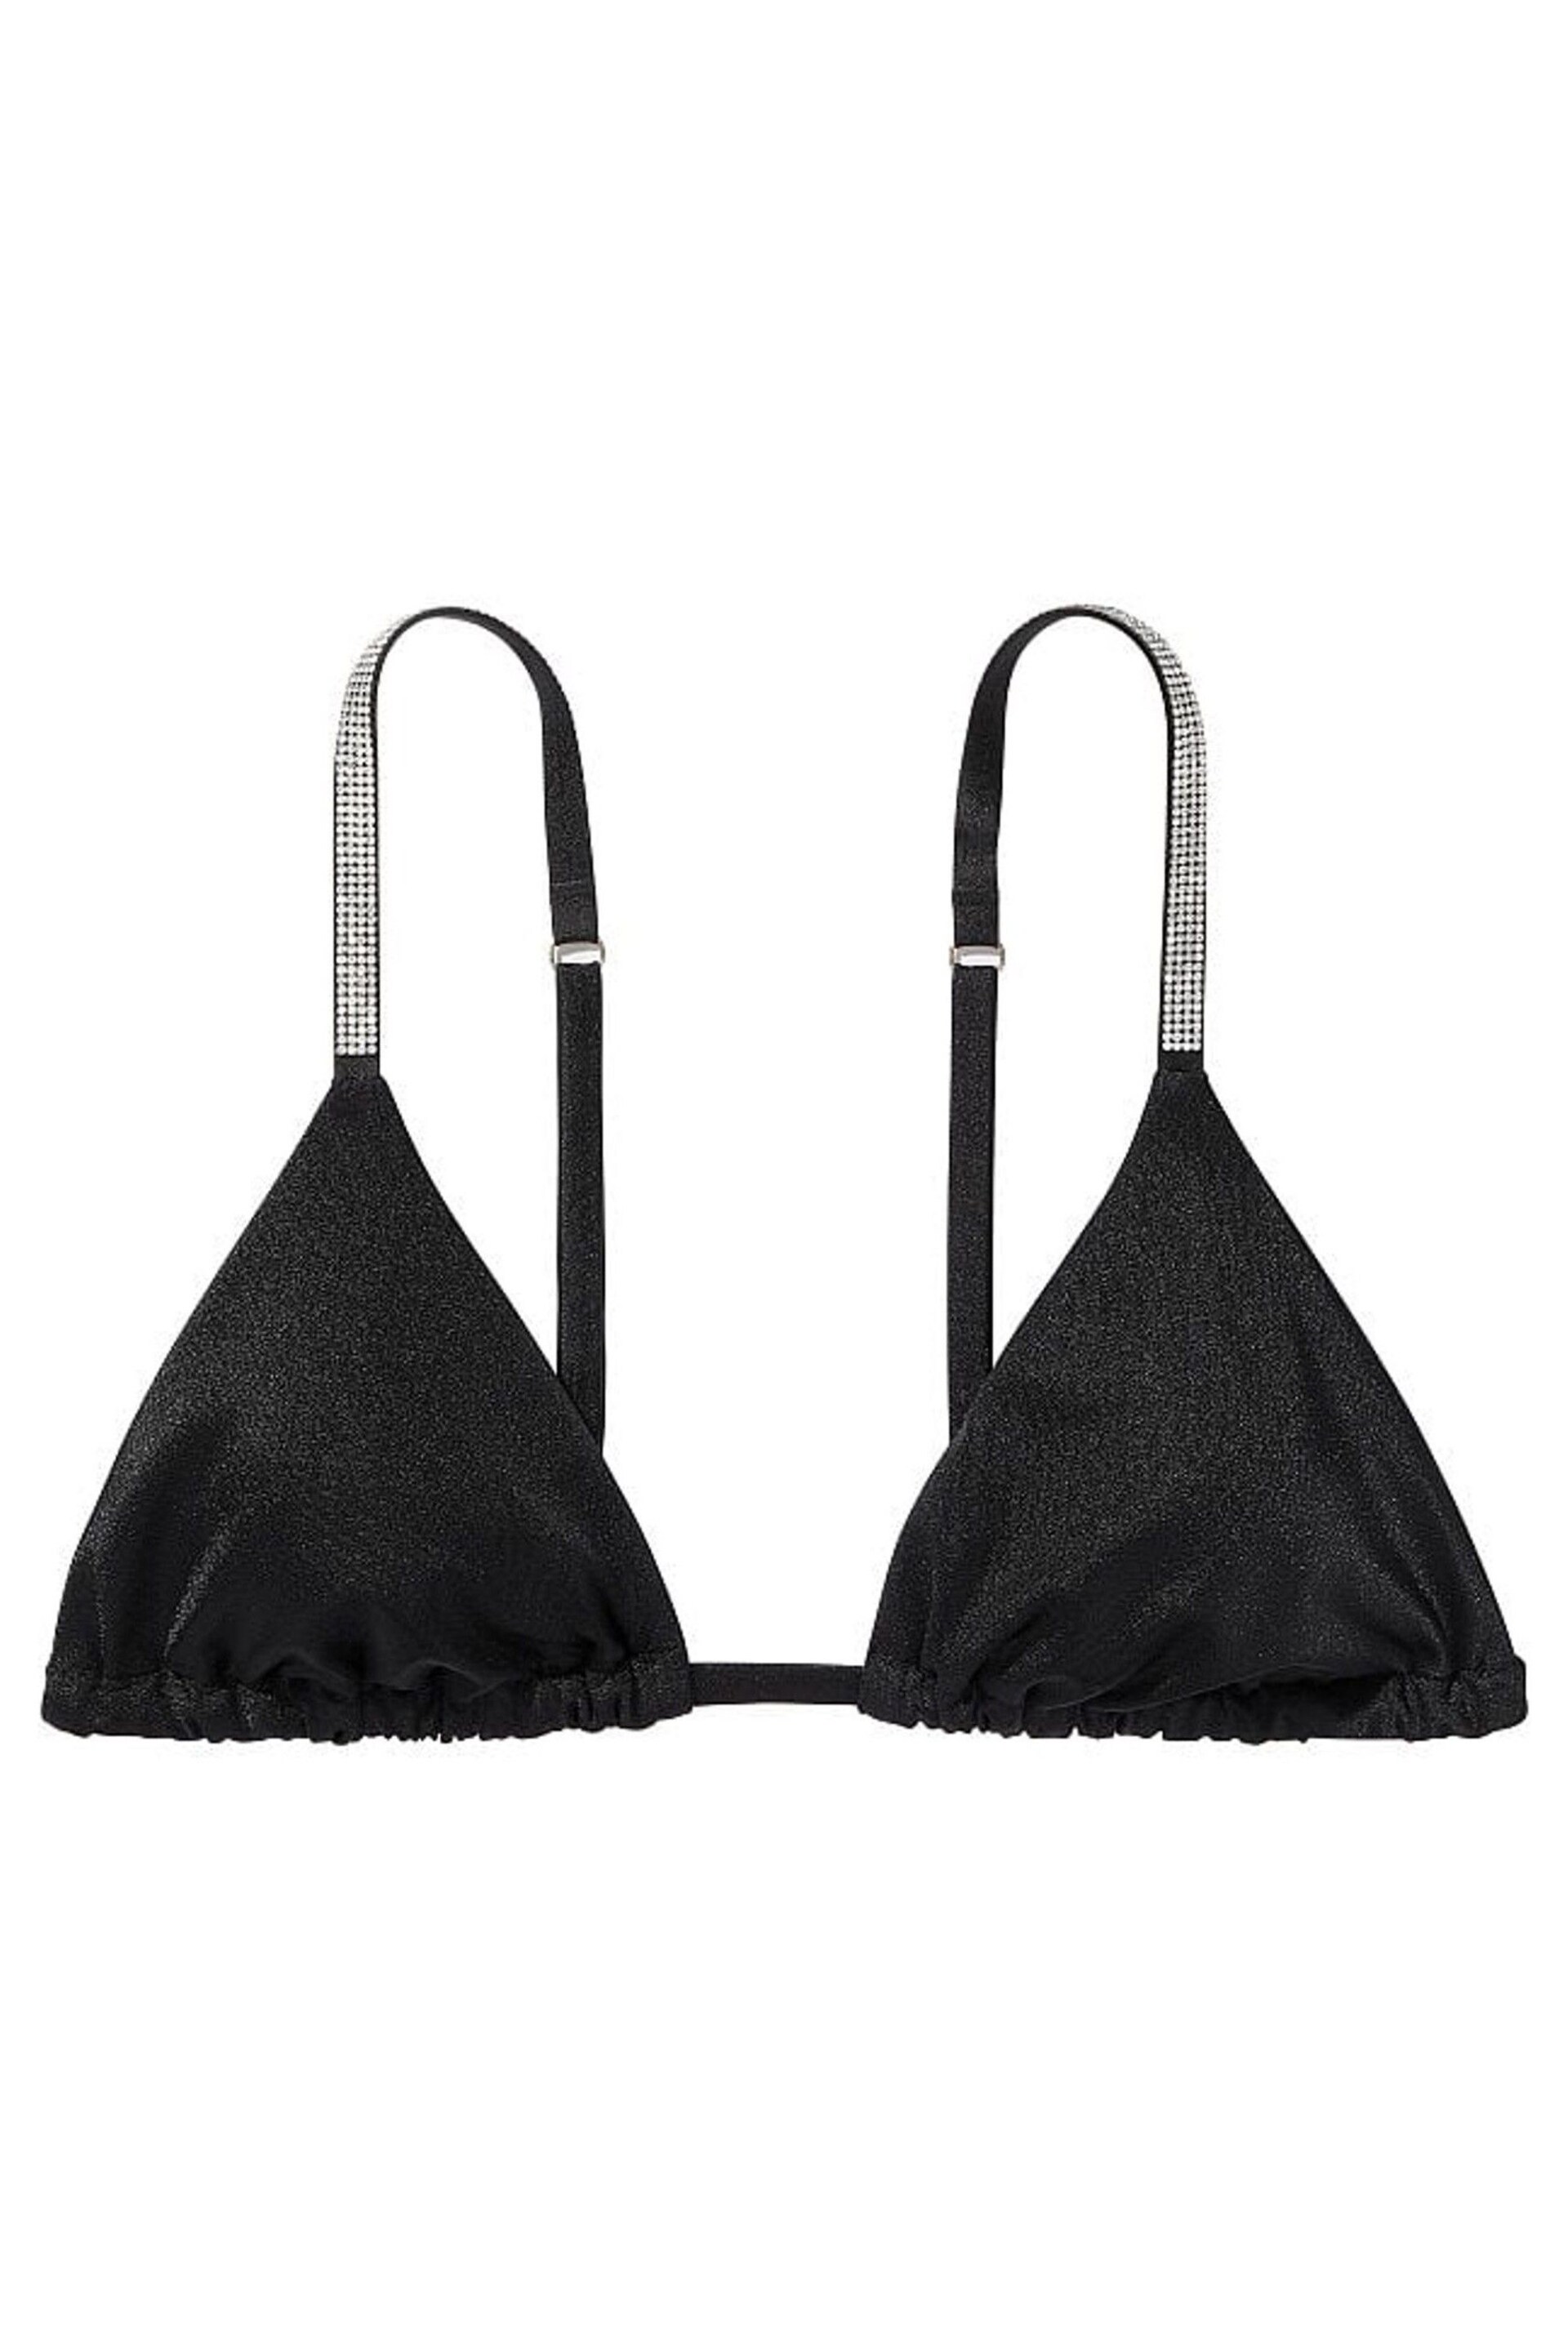 Victoria's Secret Nero Black Triangle Shine Strap Swim Bikini Top - Image 3 of 3